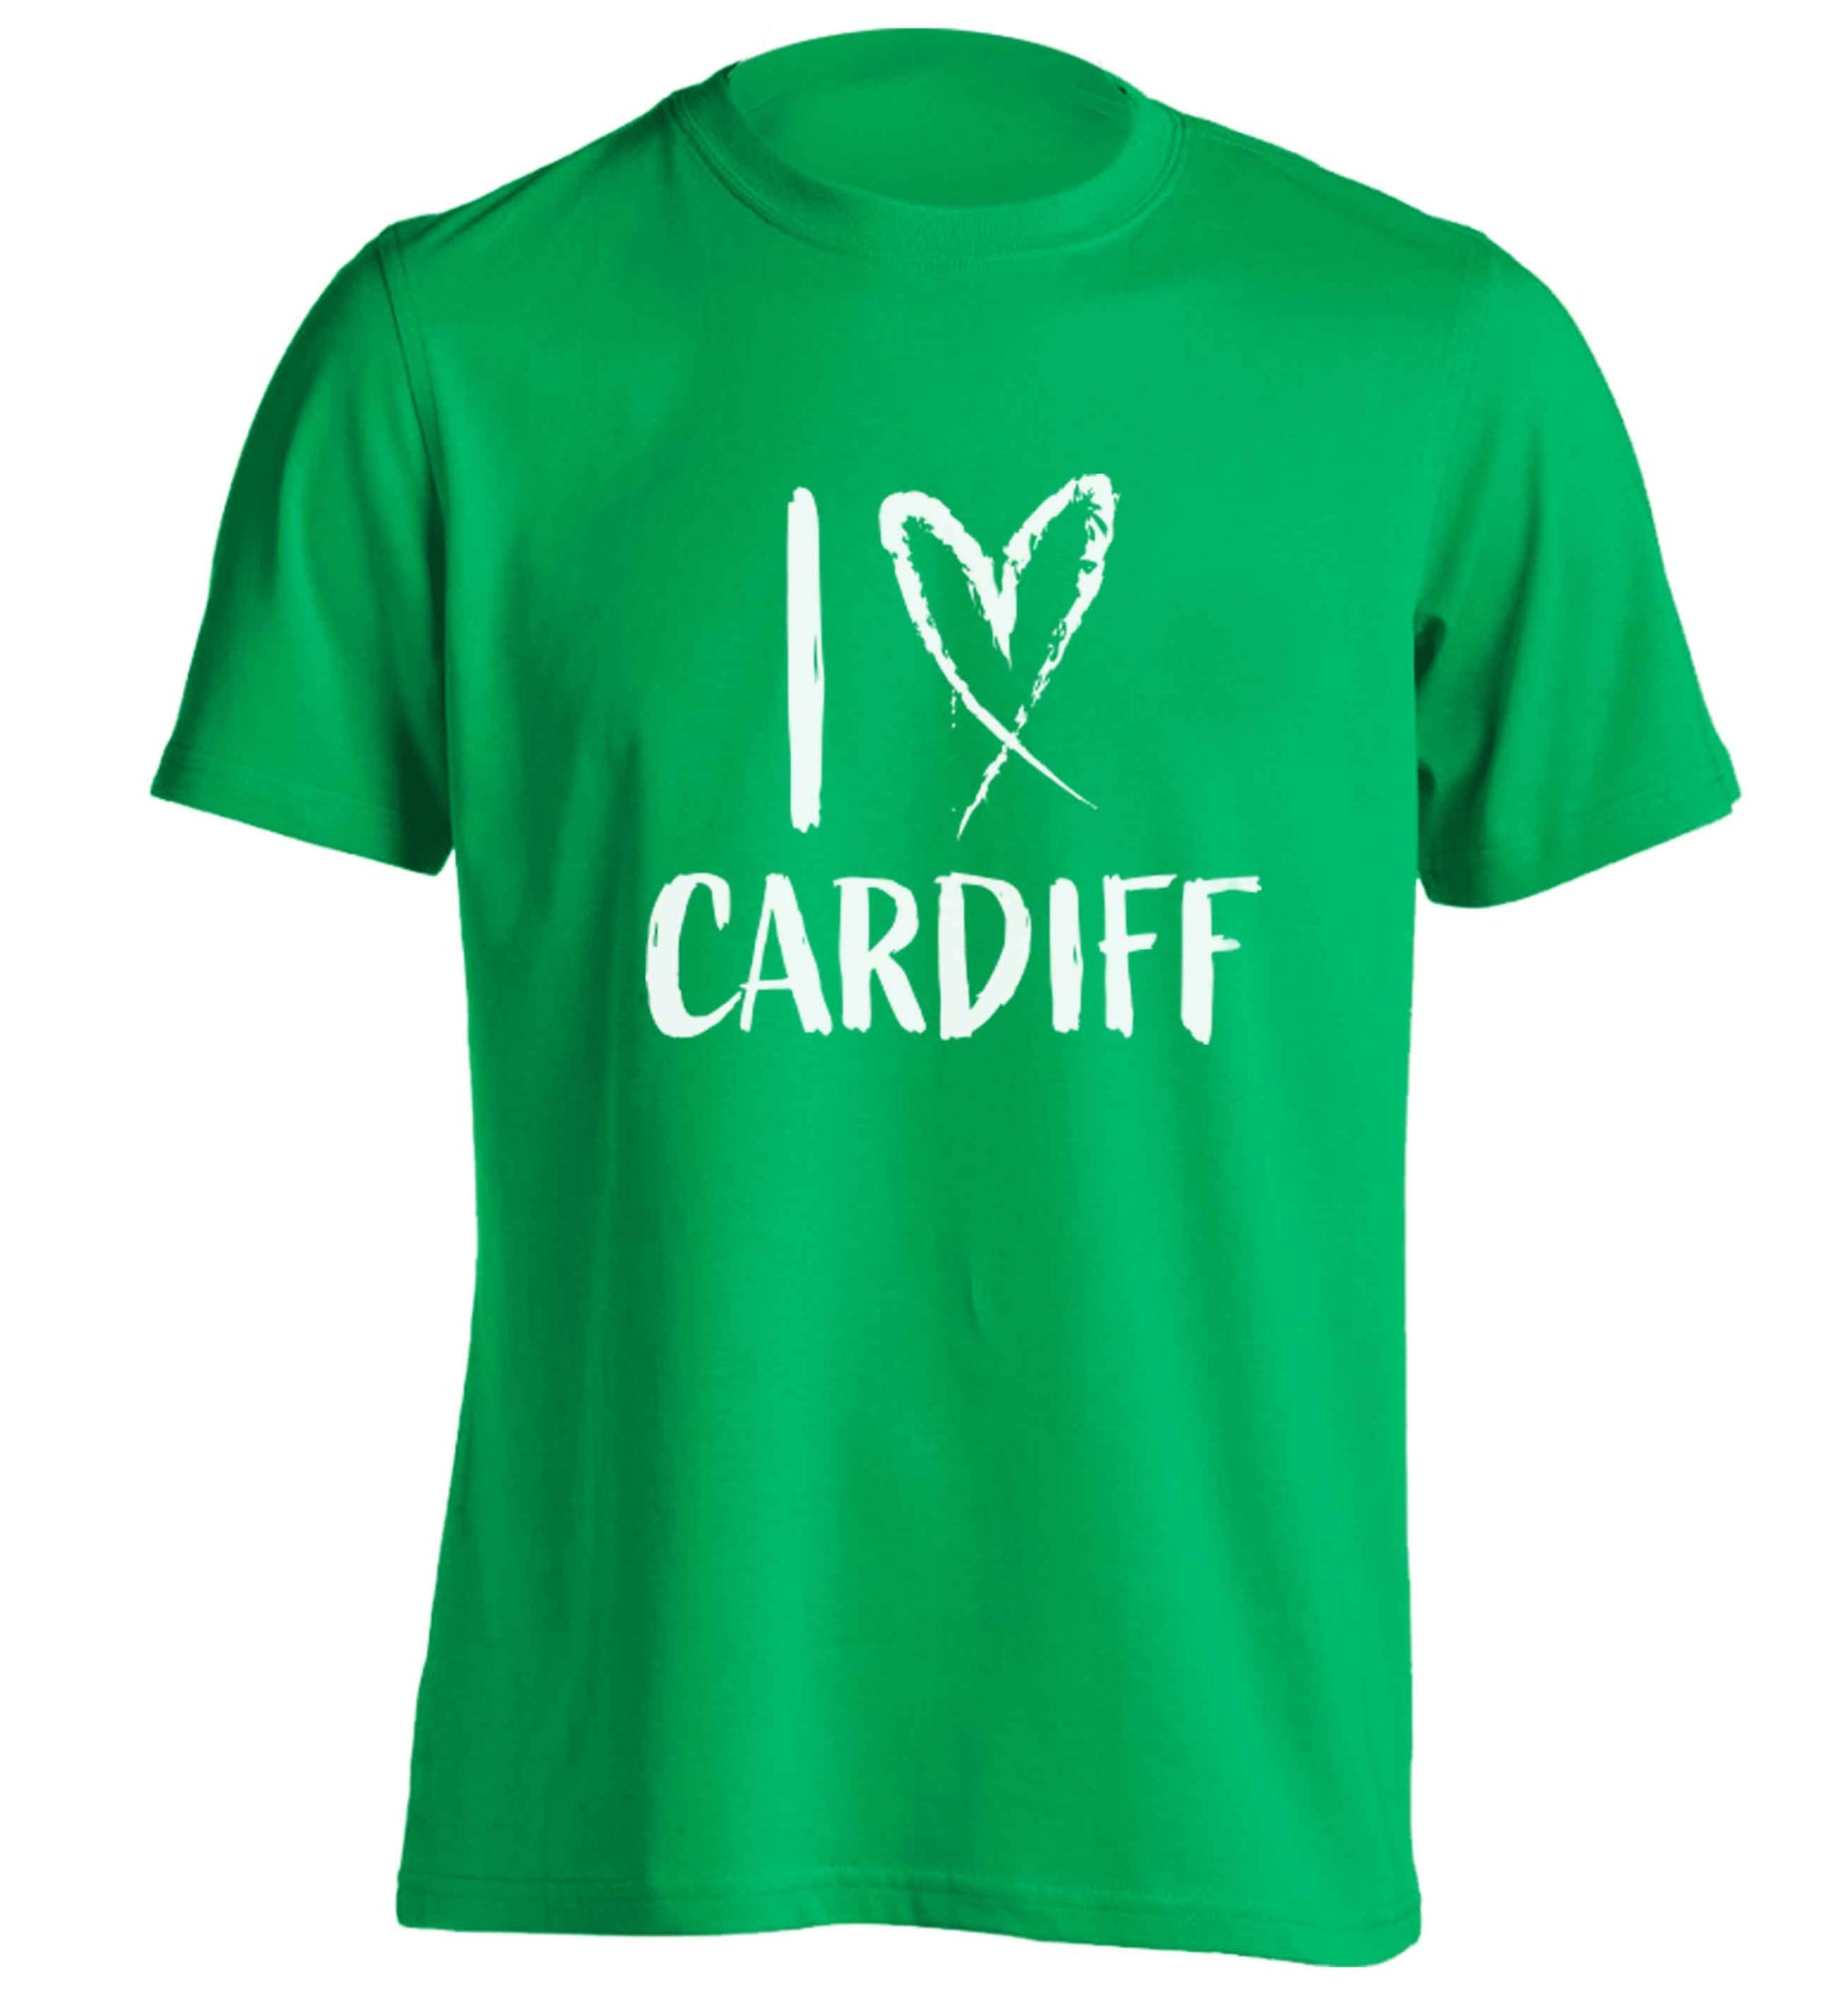 I love Cardiff adults unisex green Tshirt 2XL